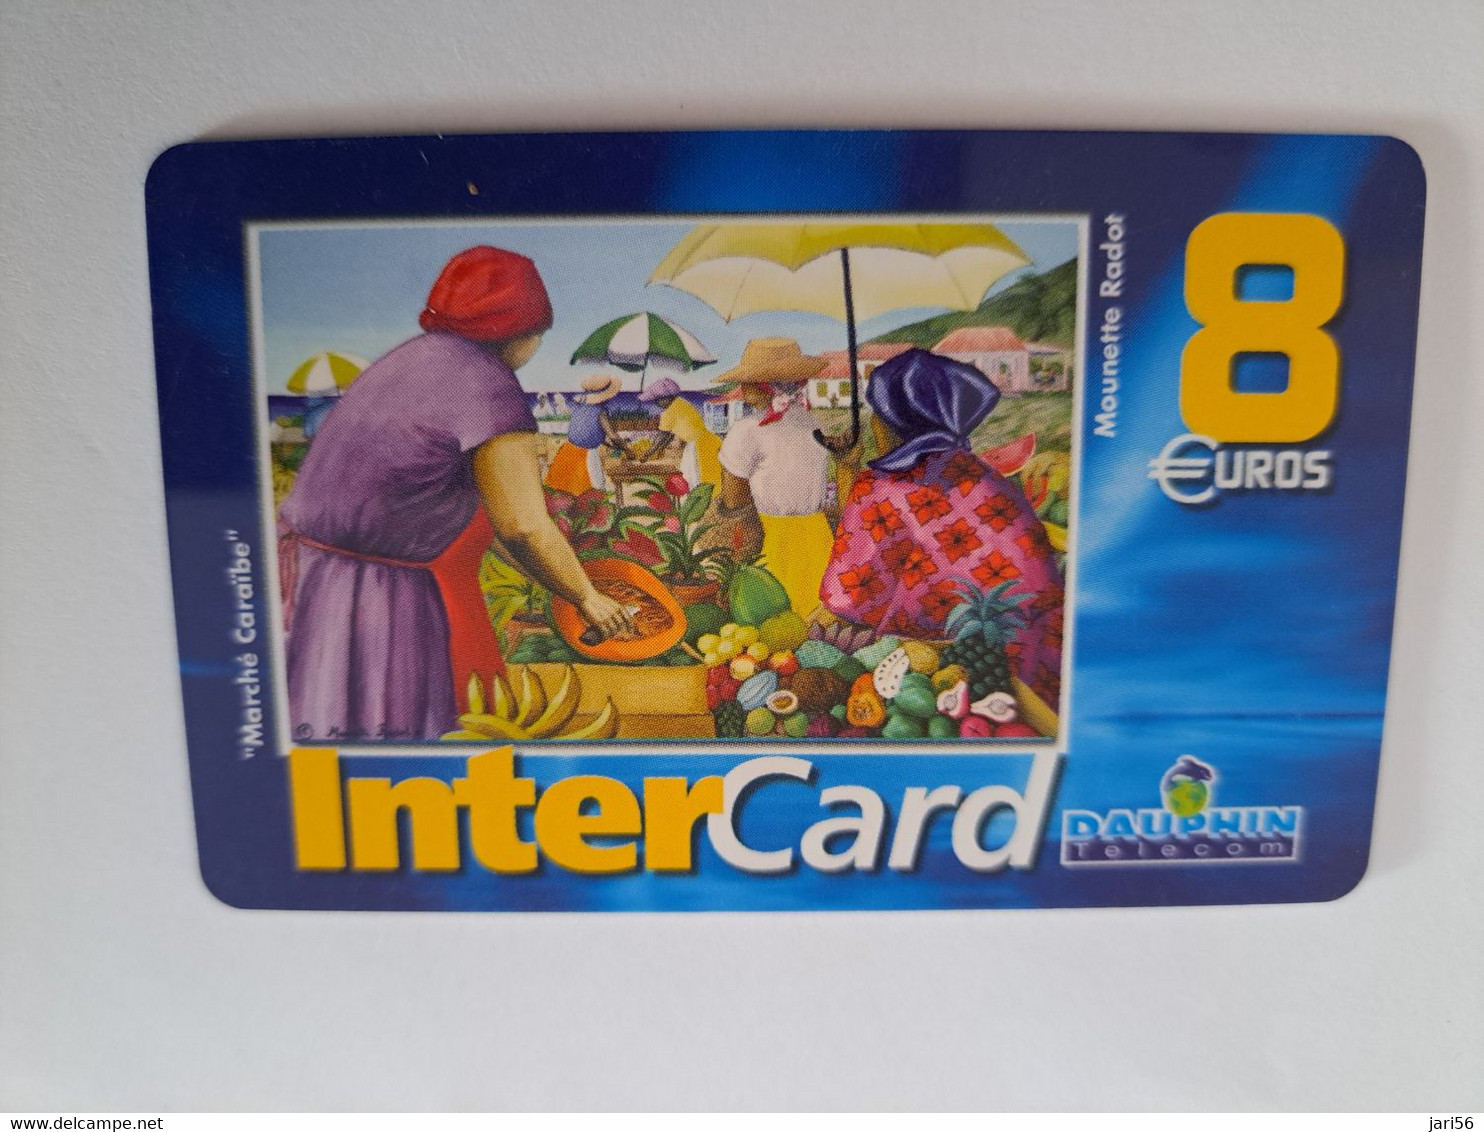 ST MARTIN / INTERCARD  8 EURO  MARCHE CARAIBE         NO 045  Fine Used Card    ** 10902** - Antillas (Francesas)